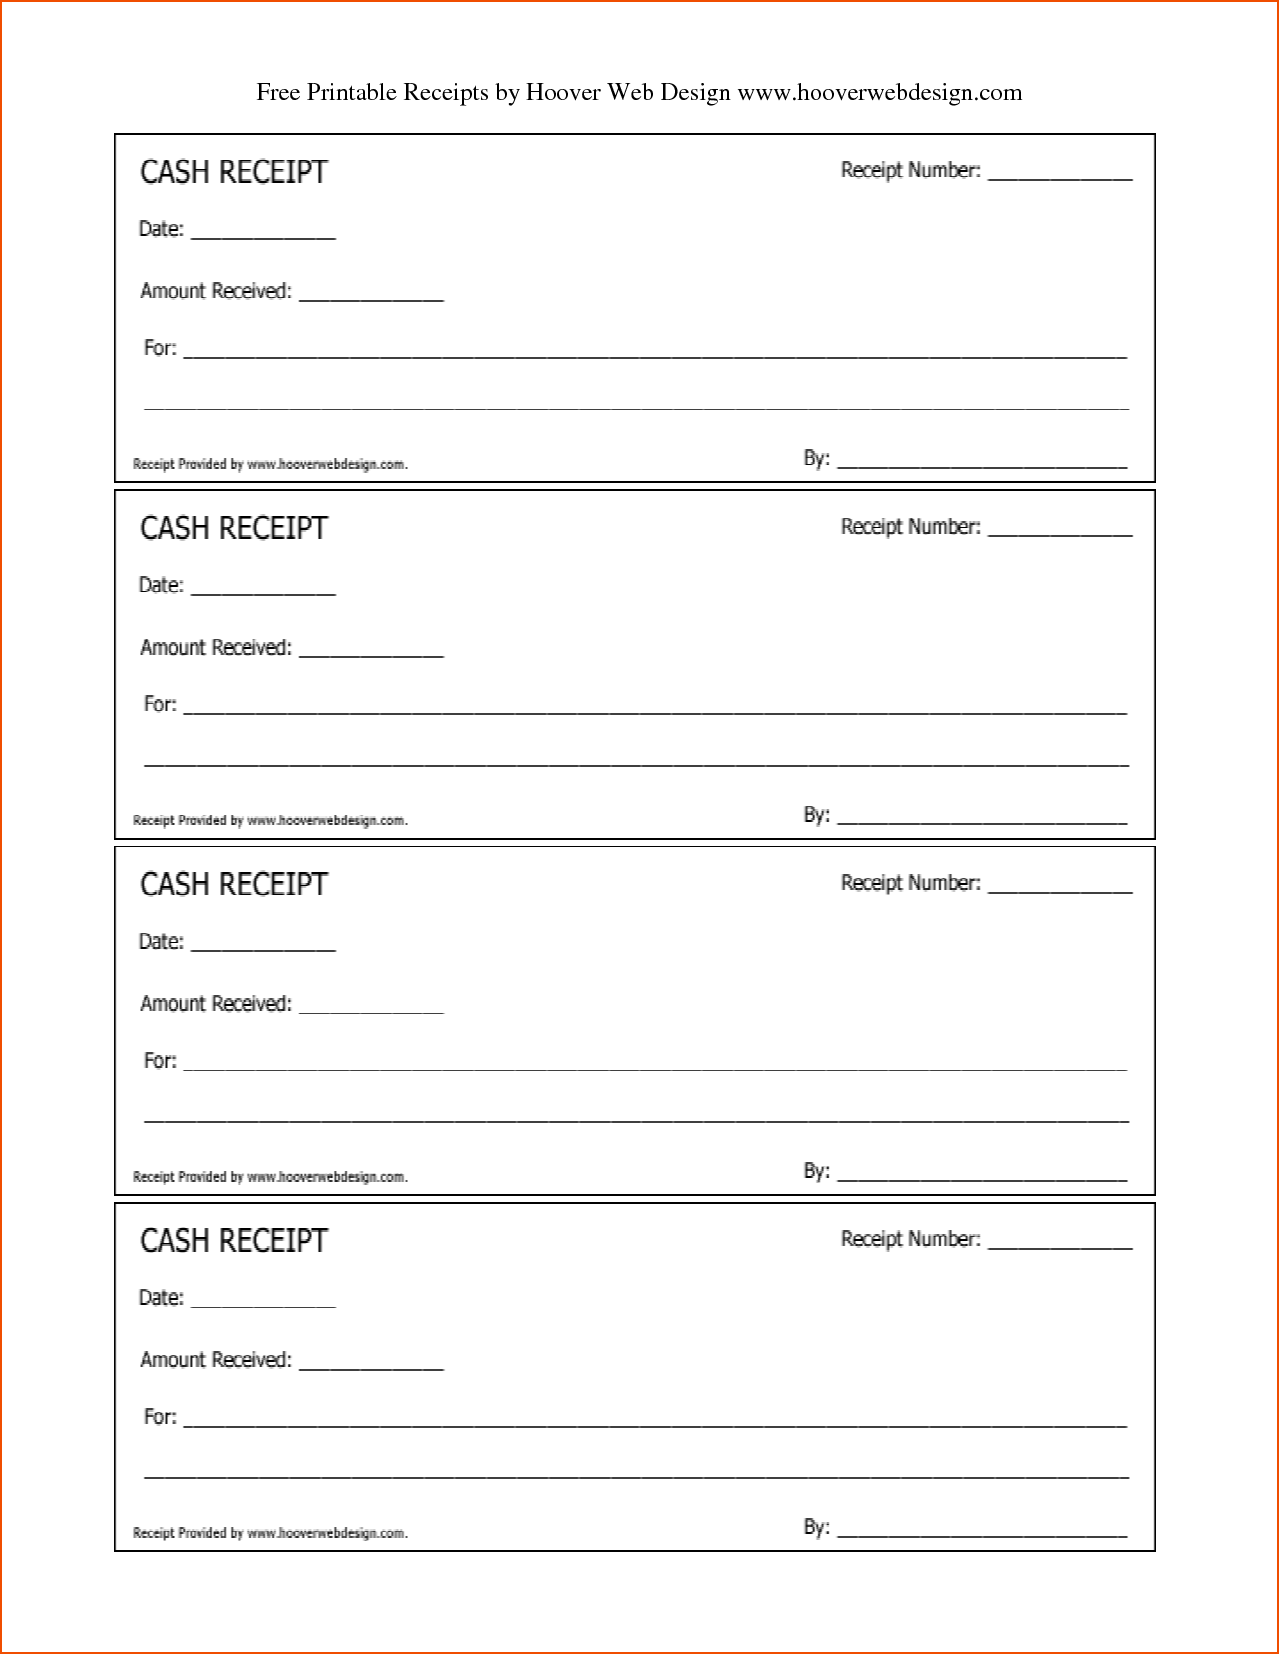 receipt-log-template-printable-pdf-download